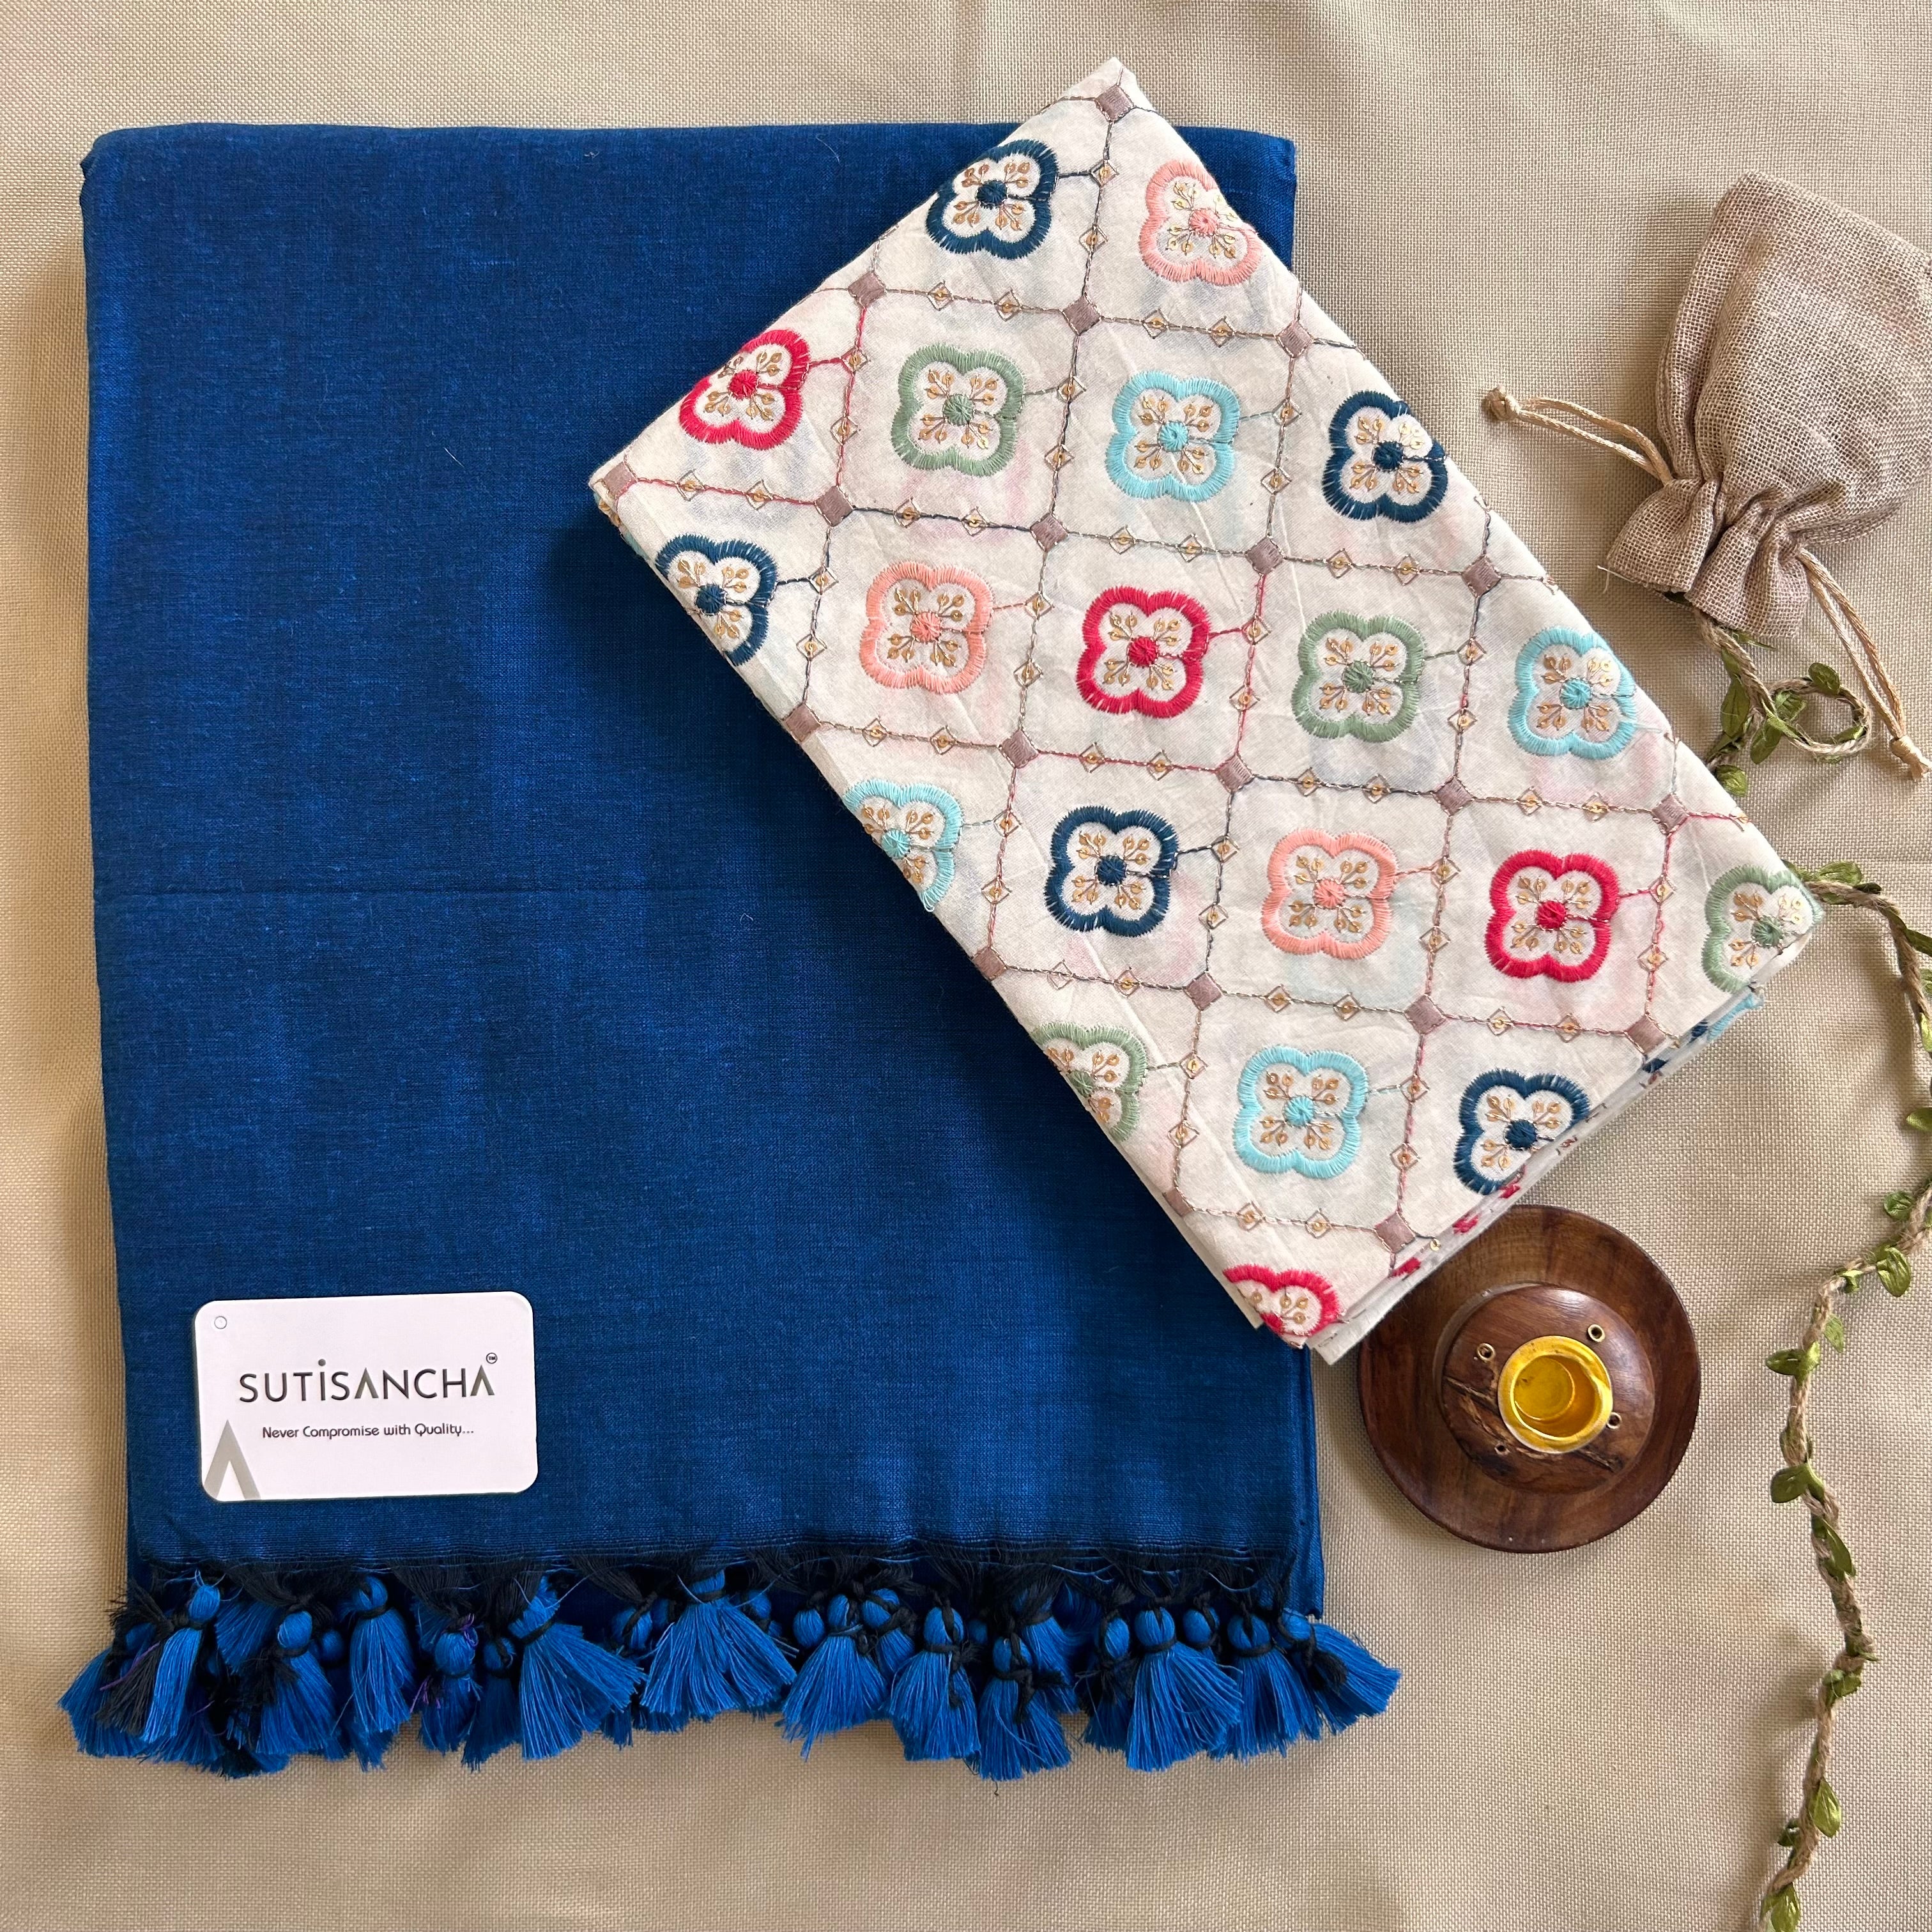 Sutisancha indigoBlue Handloom Cotton Saree with Designer Blouse